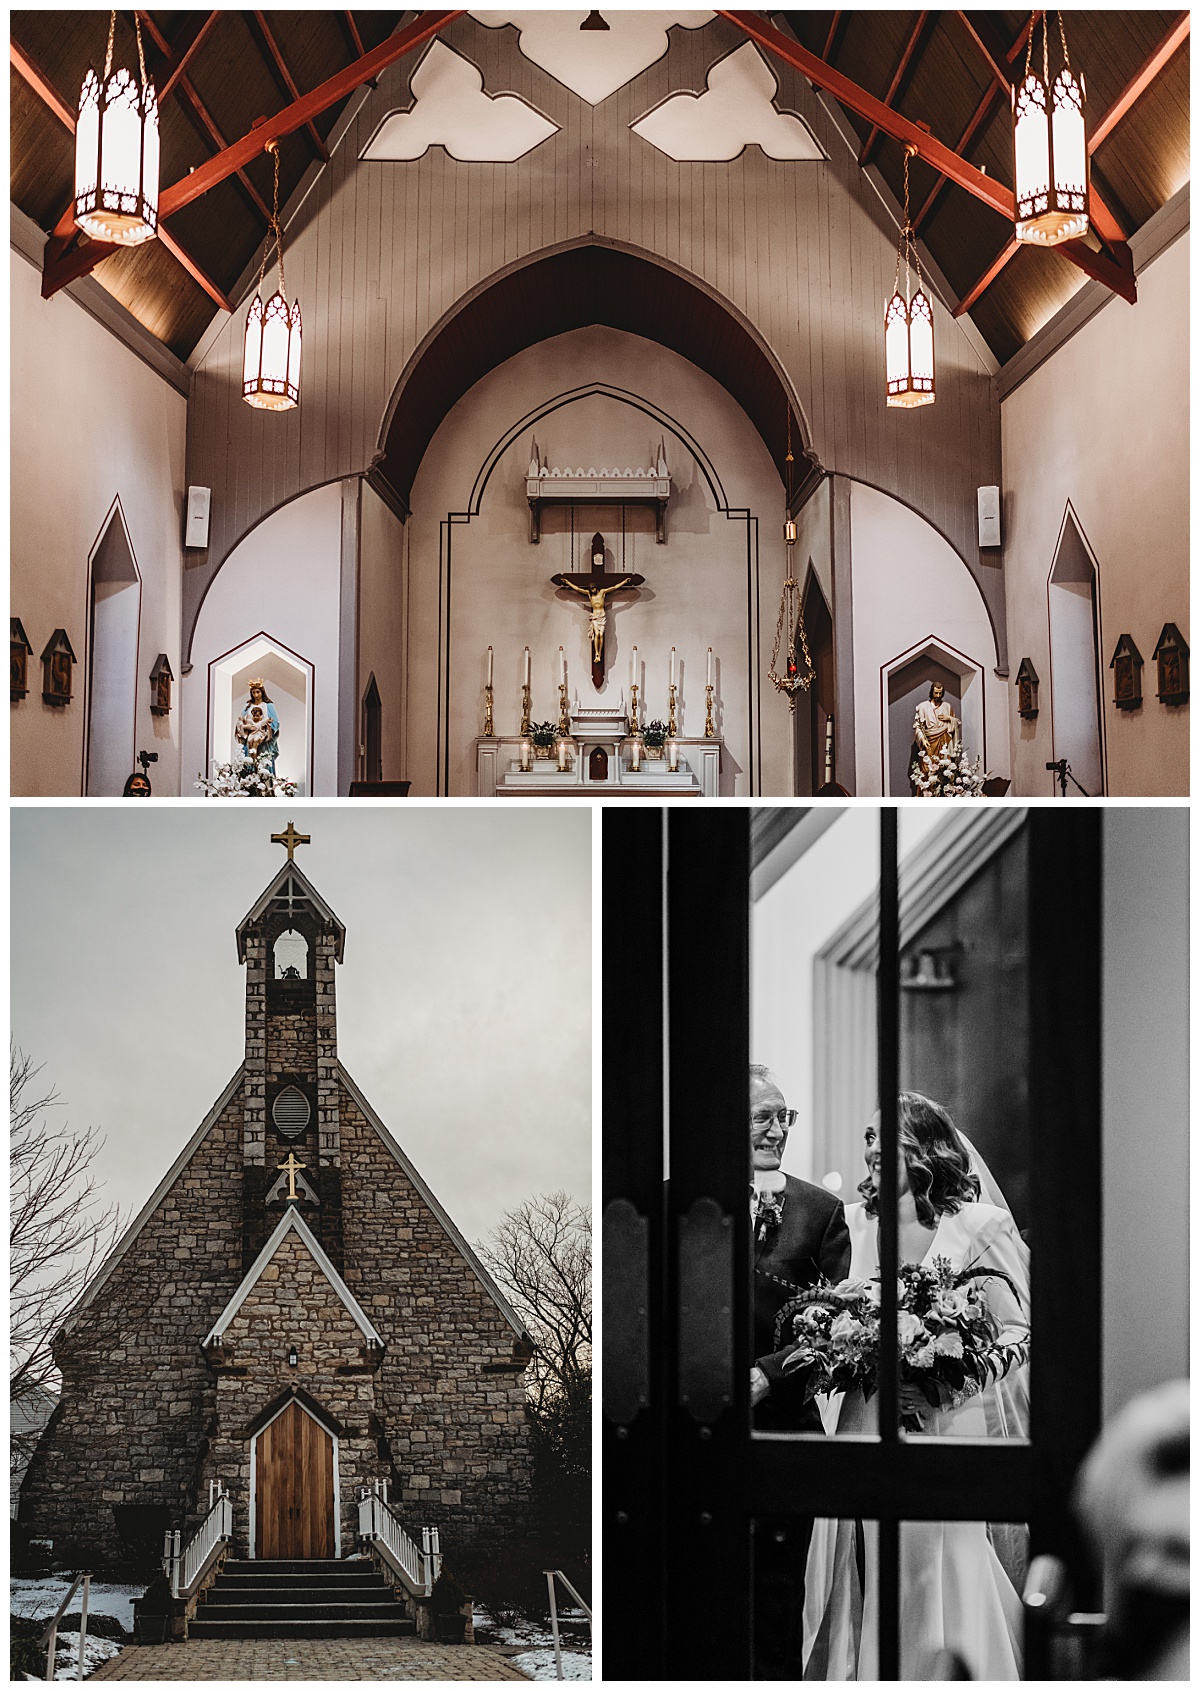 Catholic church wedding venue for a moody winter wedding in Baltimore by Brittany Dunbar Photography, a Baltimore Wedding Photographer.